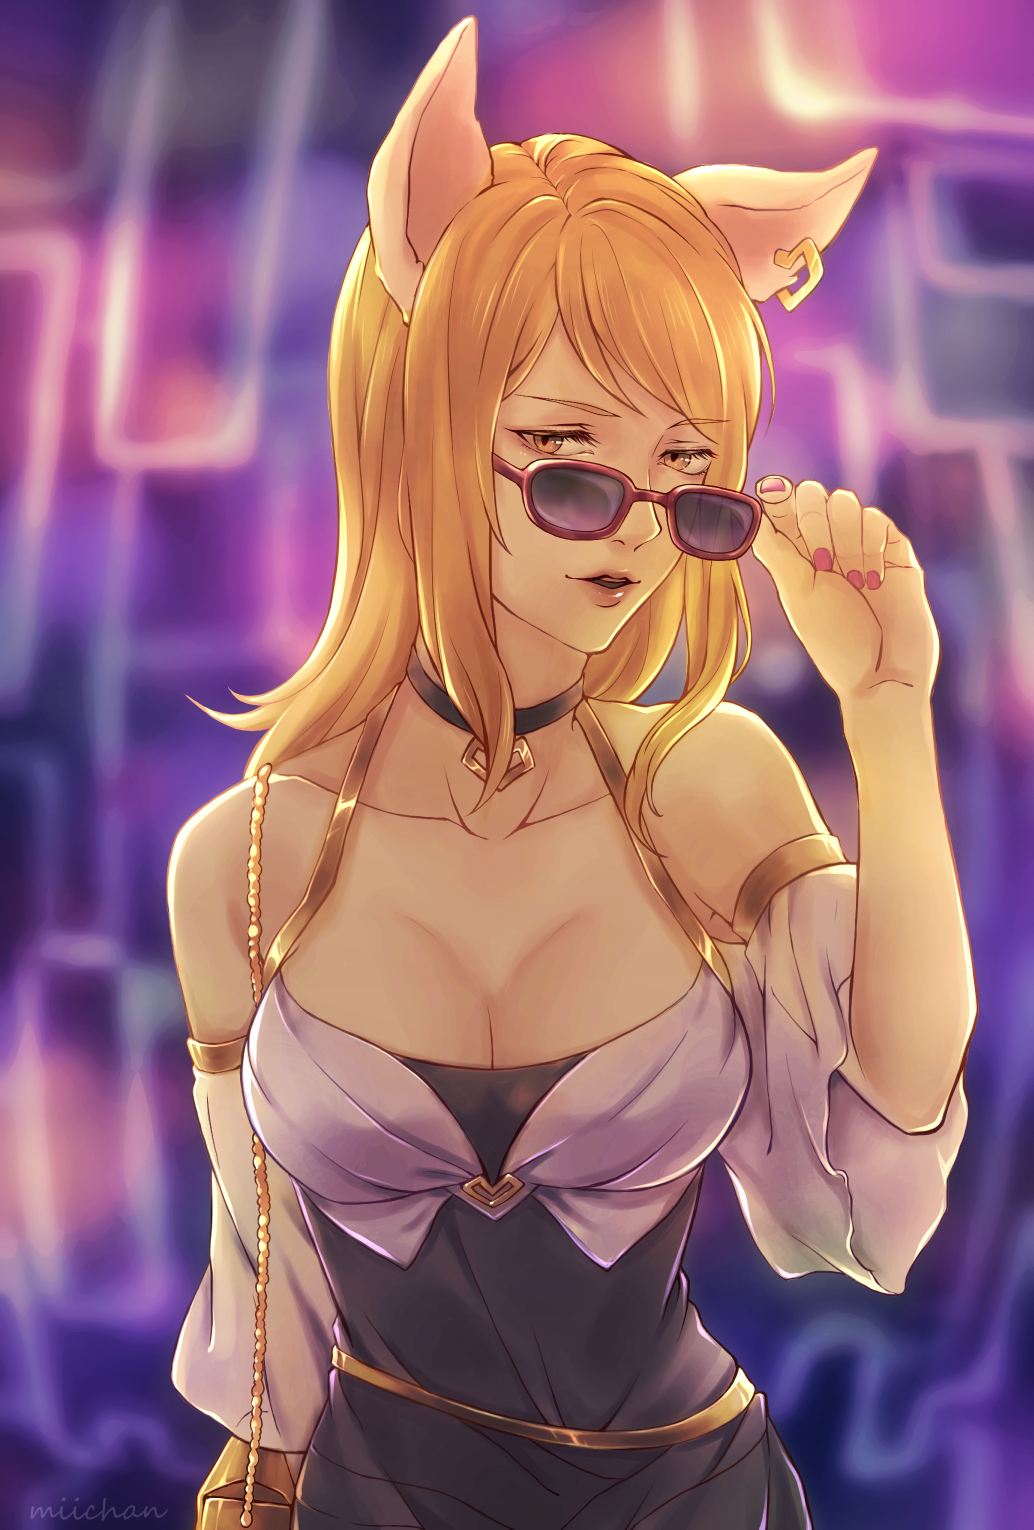 Hot Fox girl KDA Ahri (skin) with sunglasses: League of Legends (Artist: Miichan)